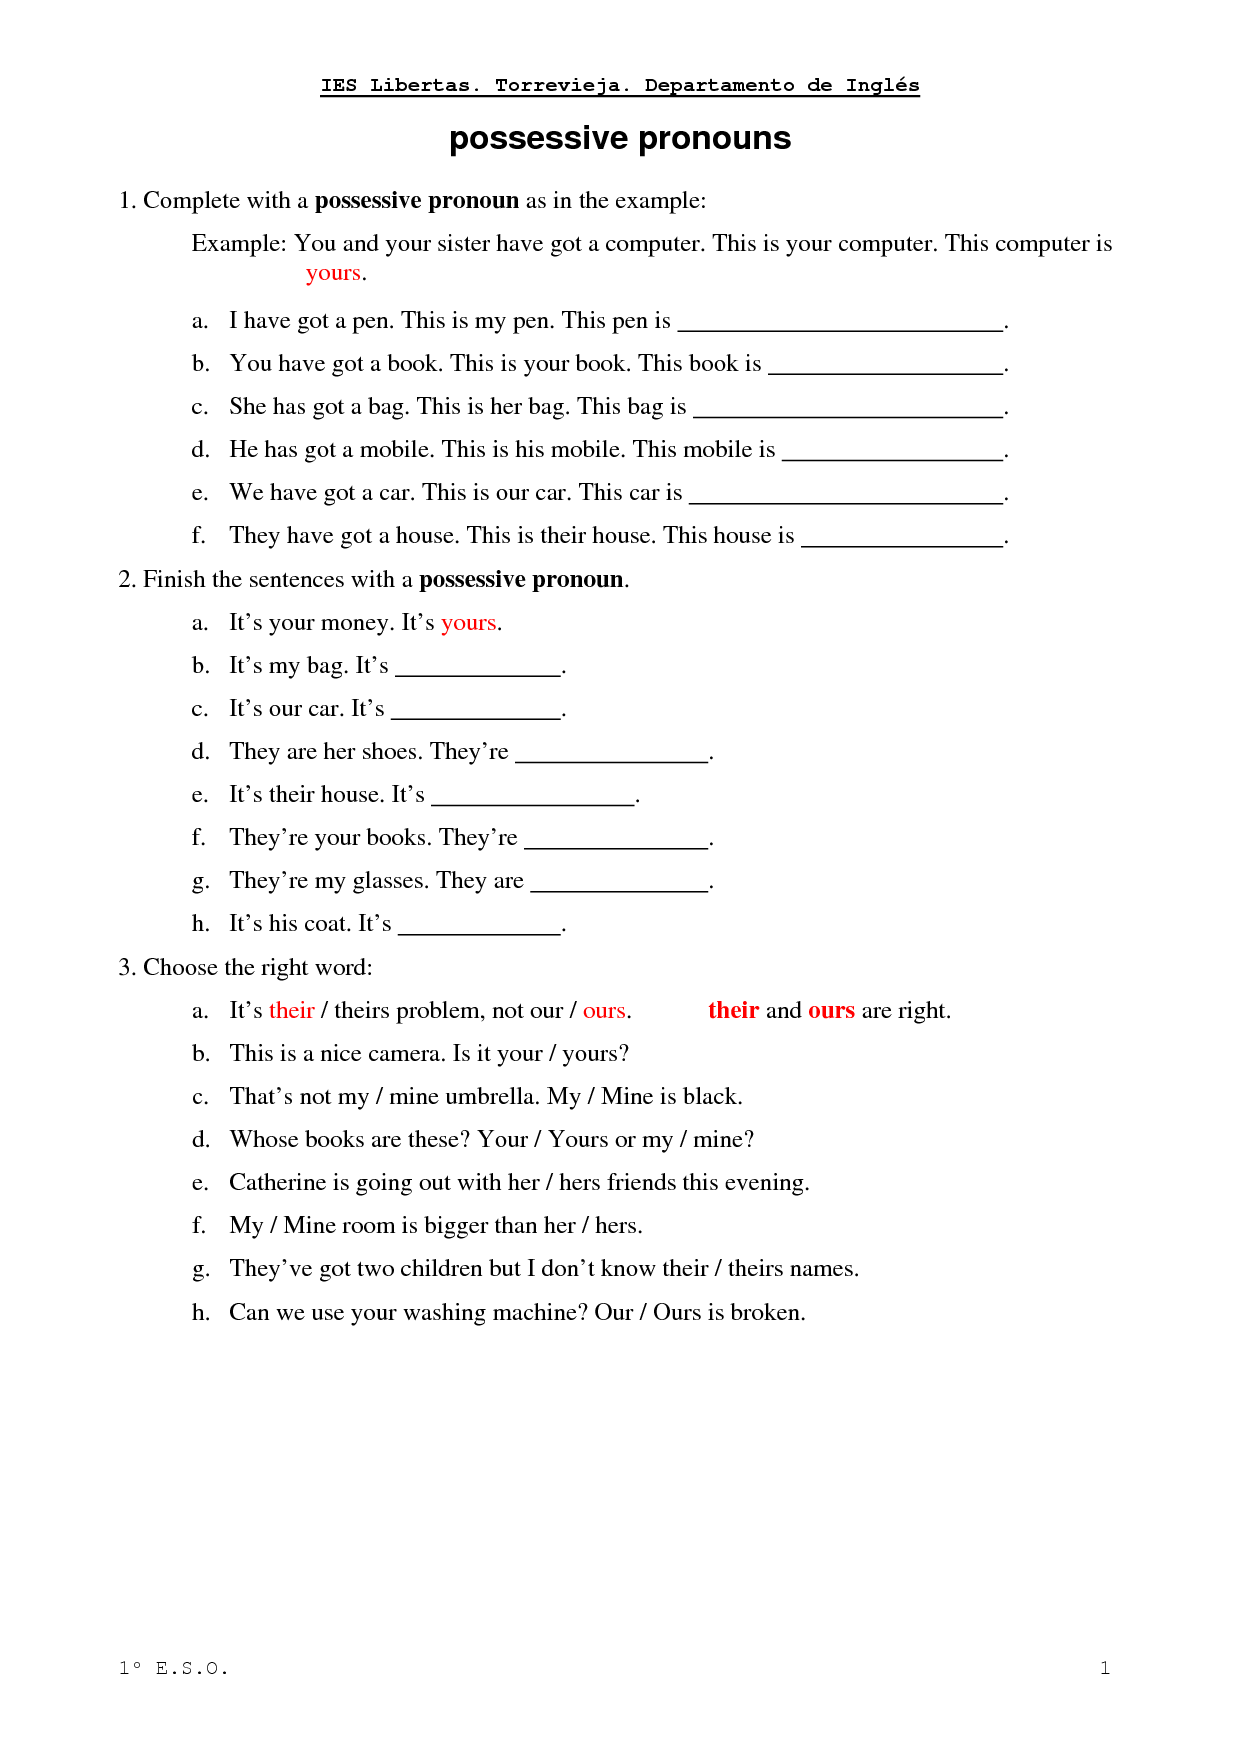 pronoun-worksheets-6th-grade-pdf-33-subject-pronouns-spanish-to-english-worksheet-answers